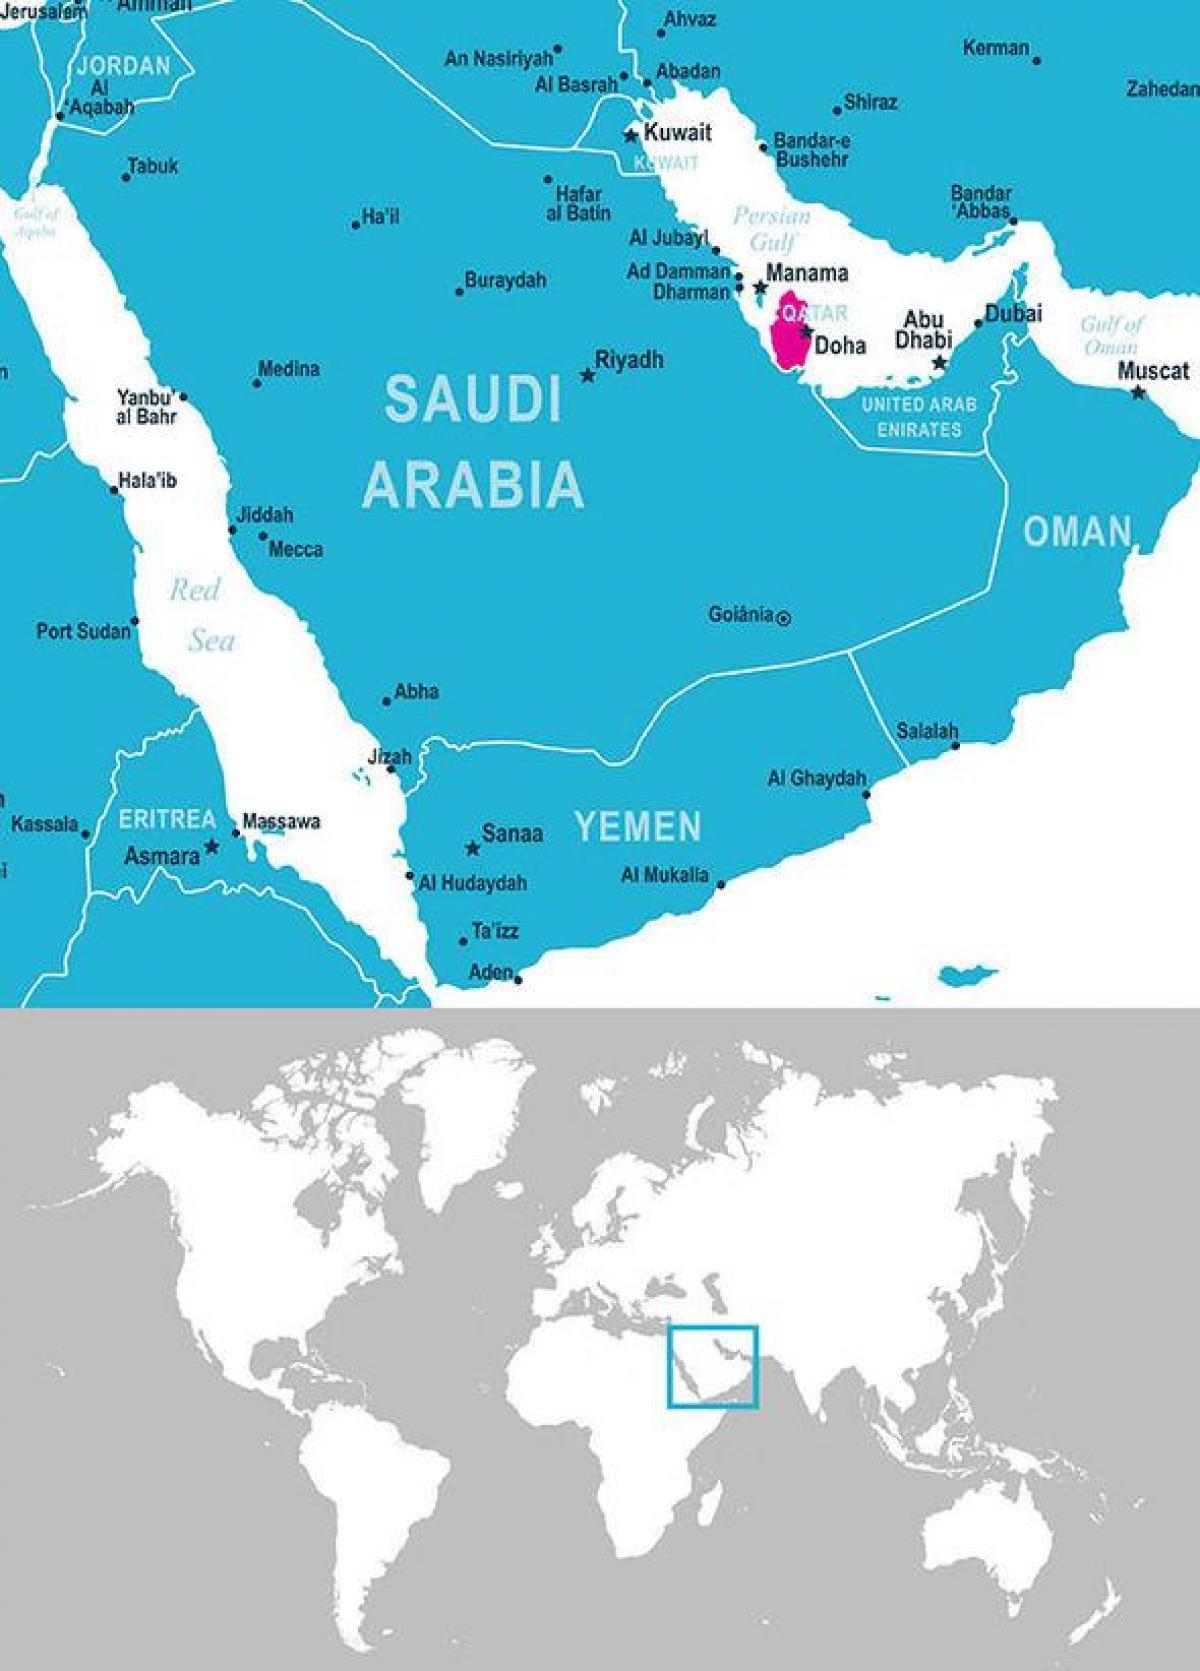 Qatar sijainti kartalla - Kartta qatar sijainti (Länsi-Aasia - Aasia)